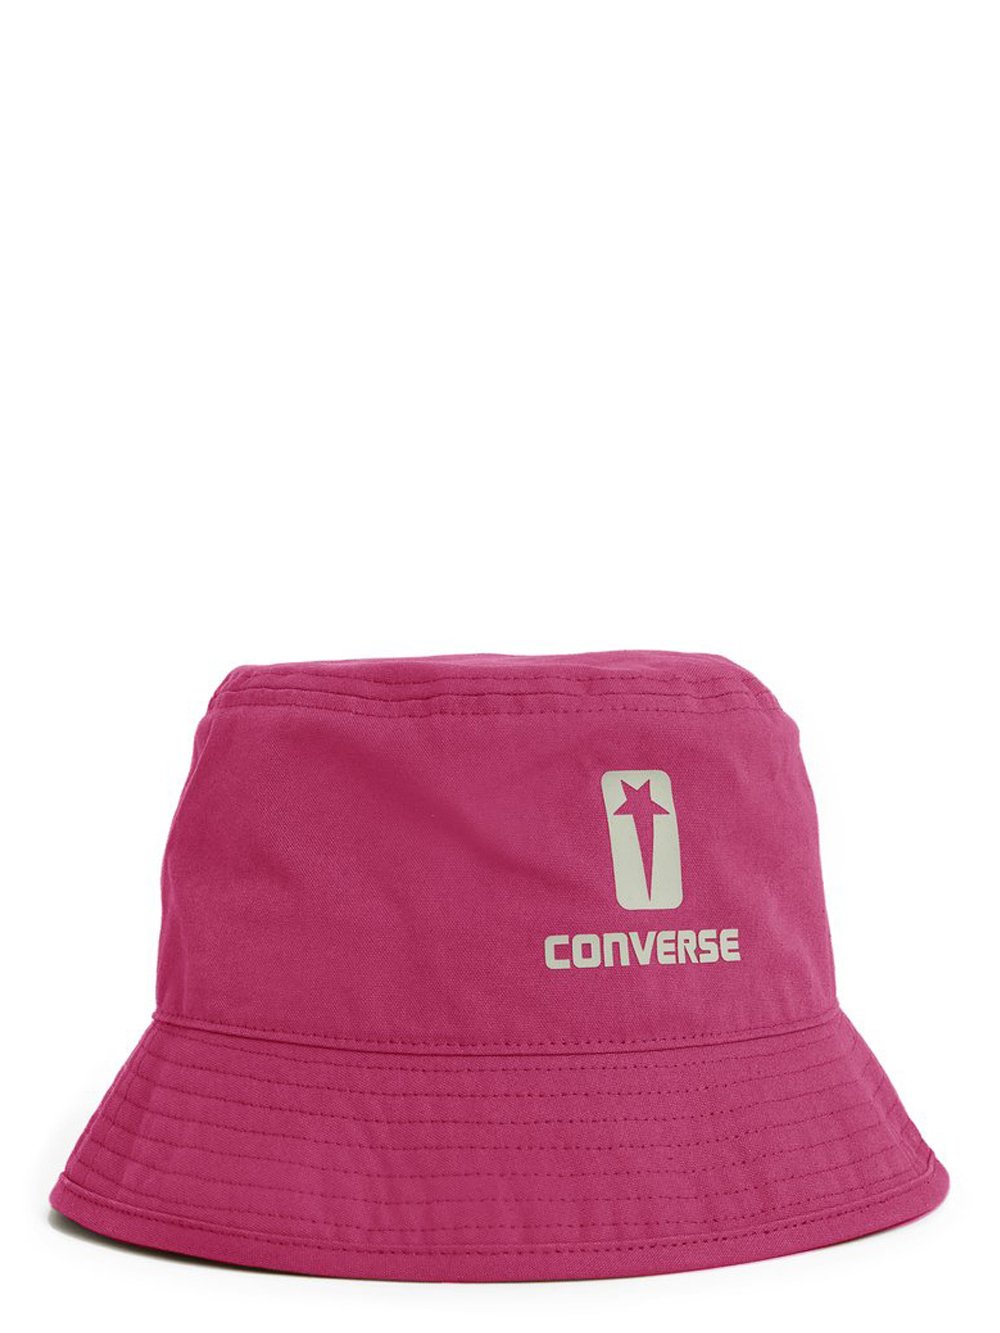 CONVERSE X DRKSHDW BUCKET HAT IN HOT PINK